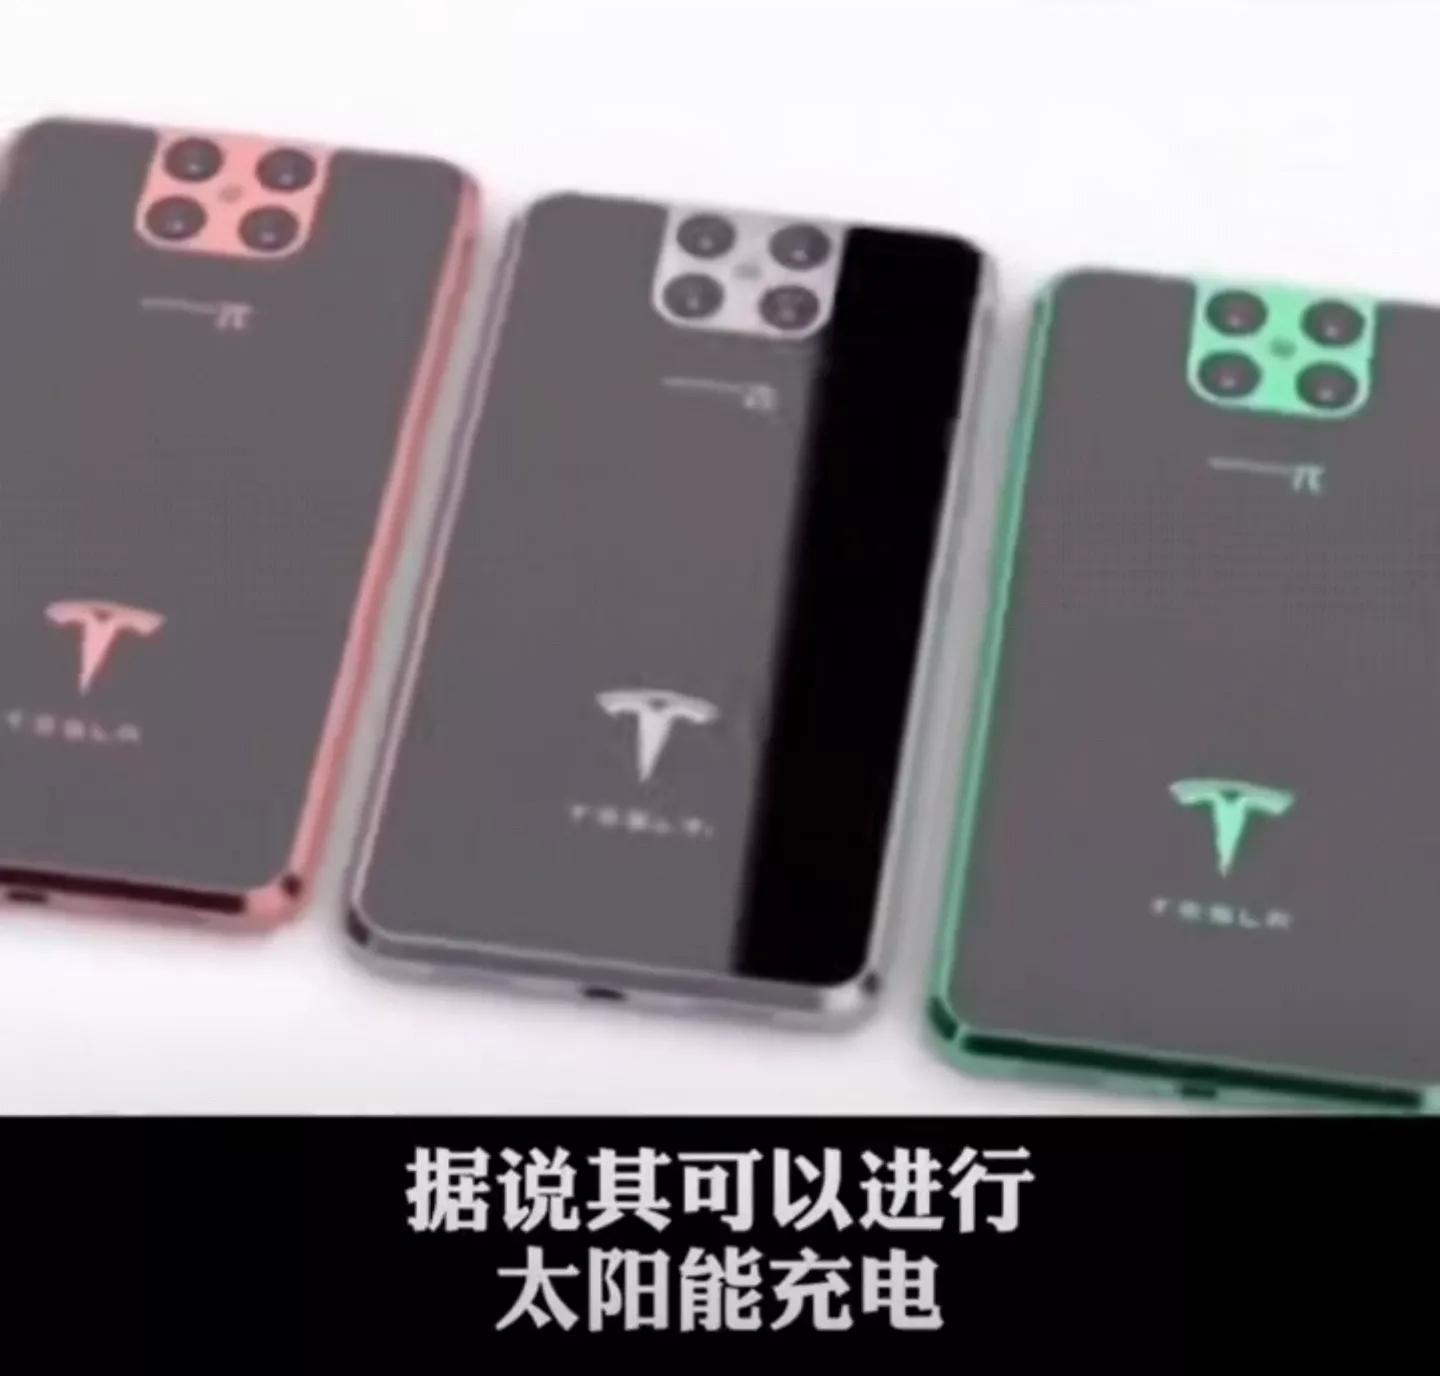 Tesla phone Model Pi